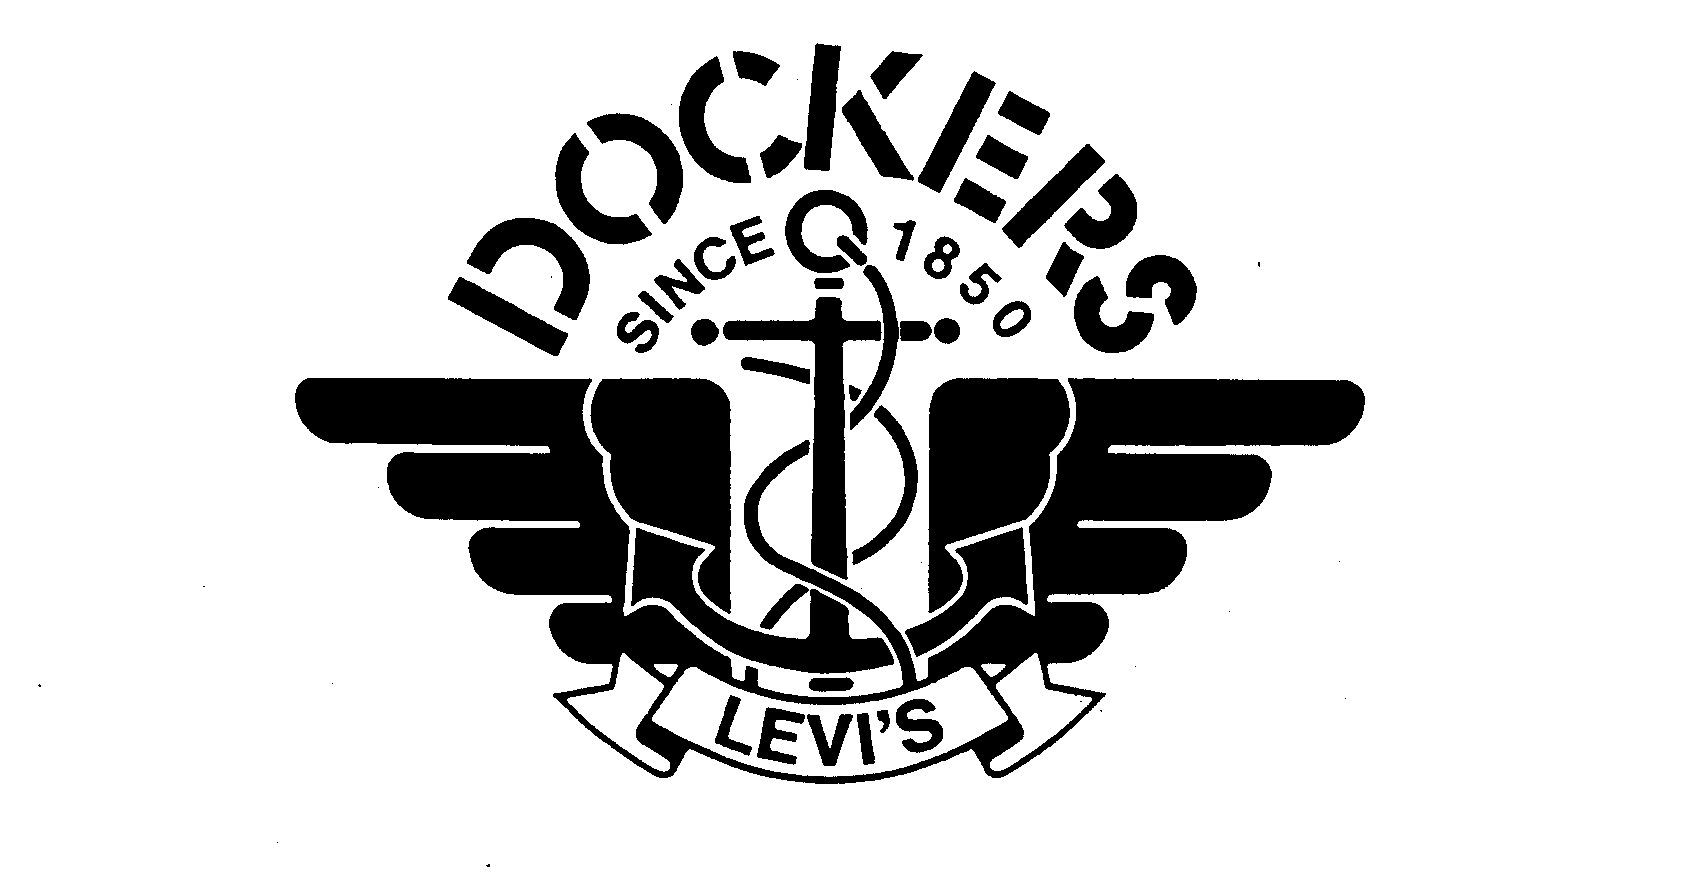 DOCKERS SINCE 1850 LEVI'S - LEVI STRAUSS & CO. Trademark Registration